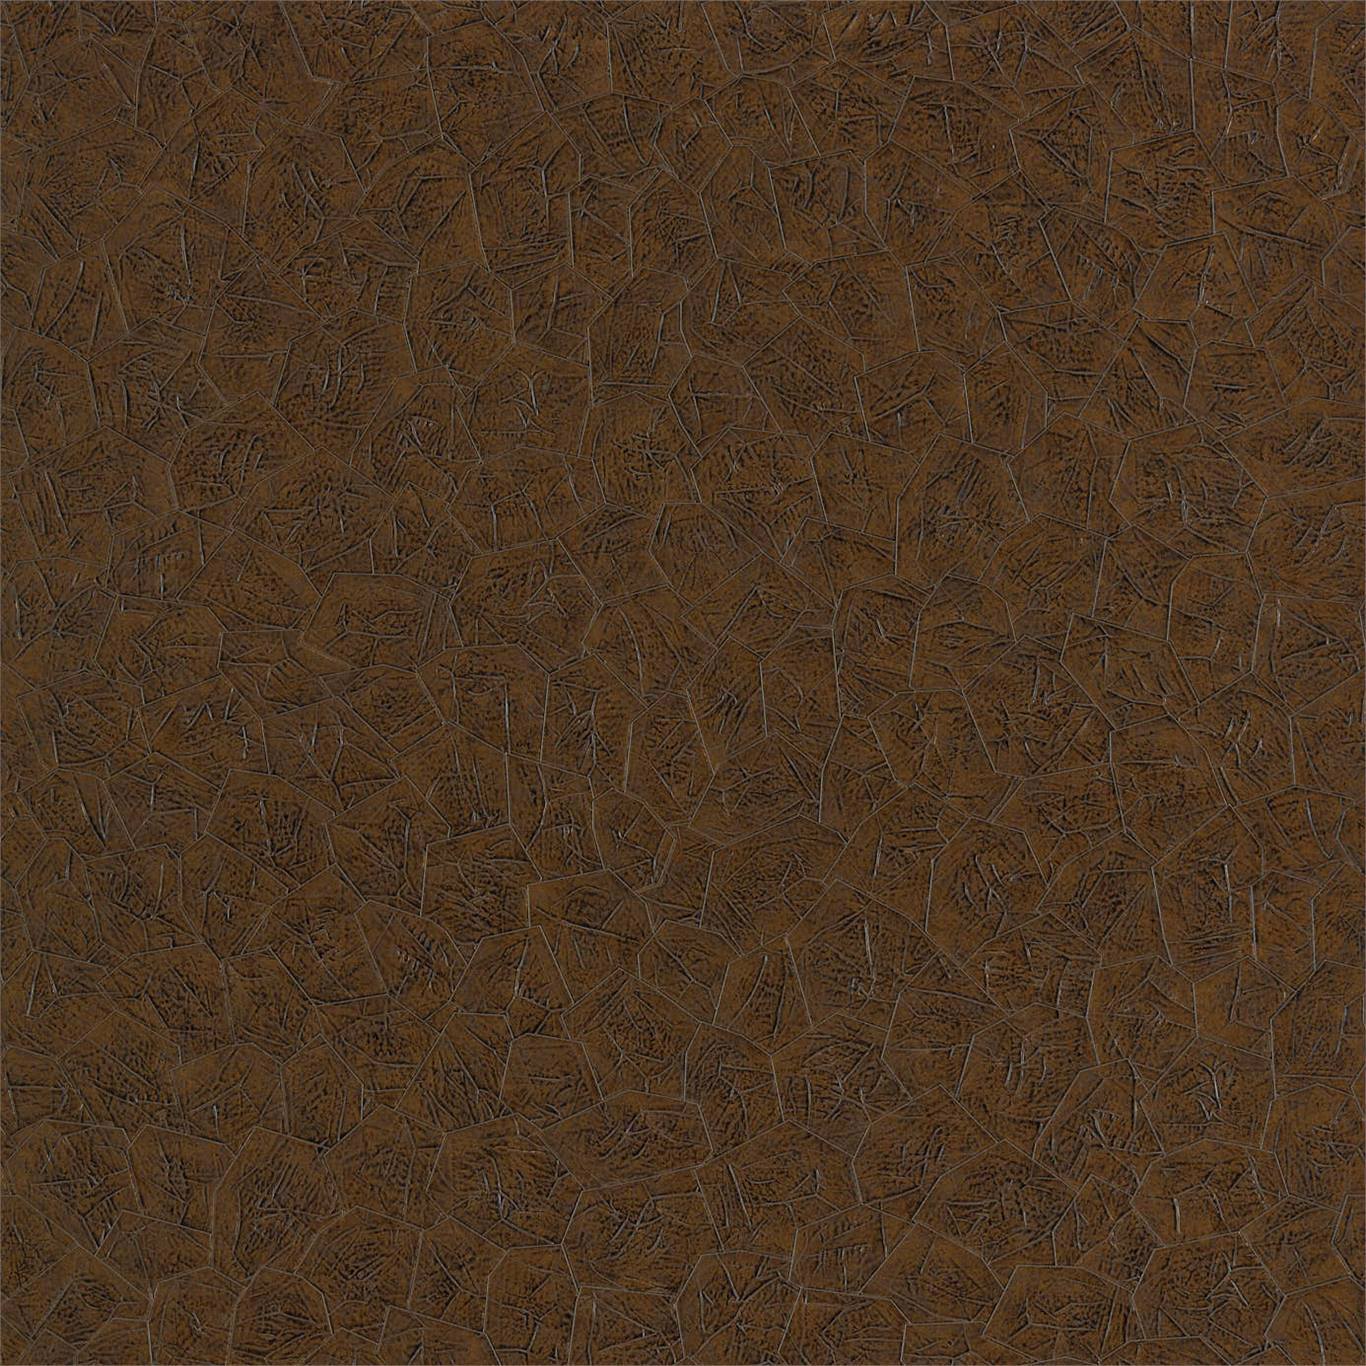 Anthology Kimberlite Copper Oxide Wallpaper by HAR